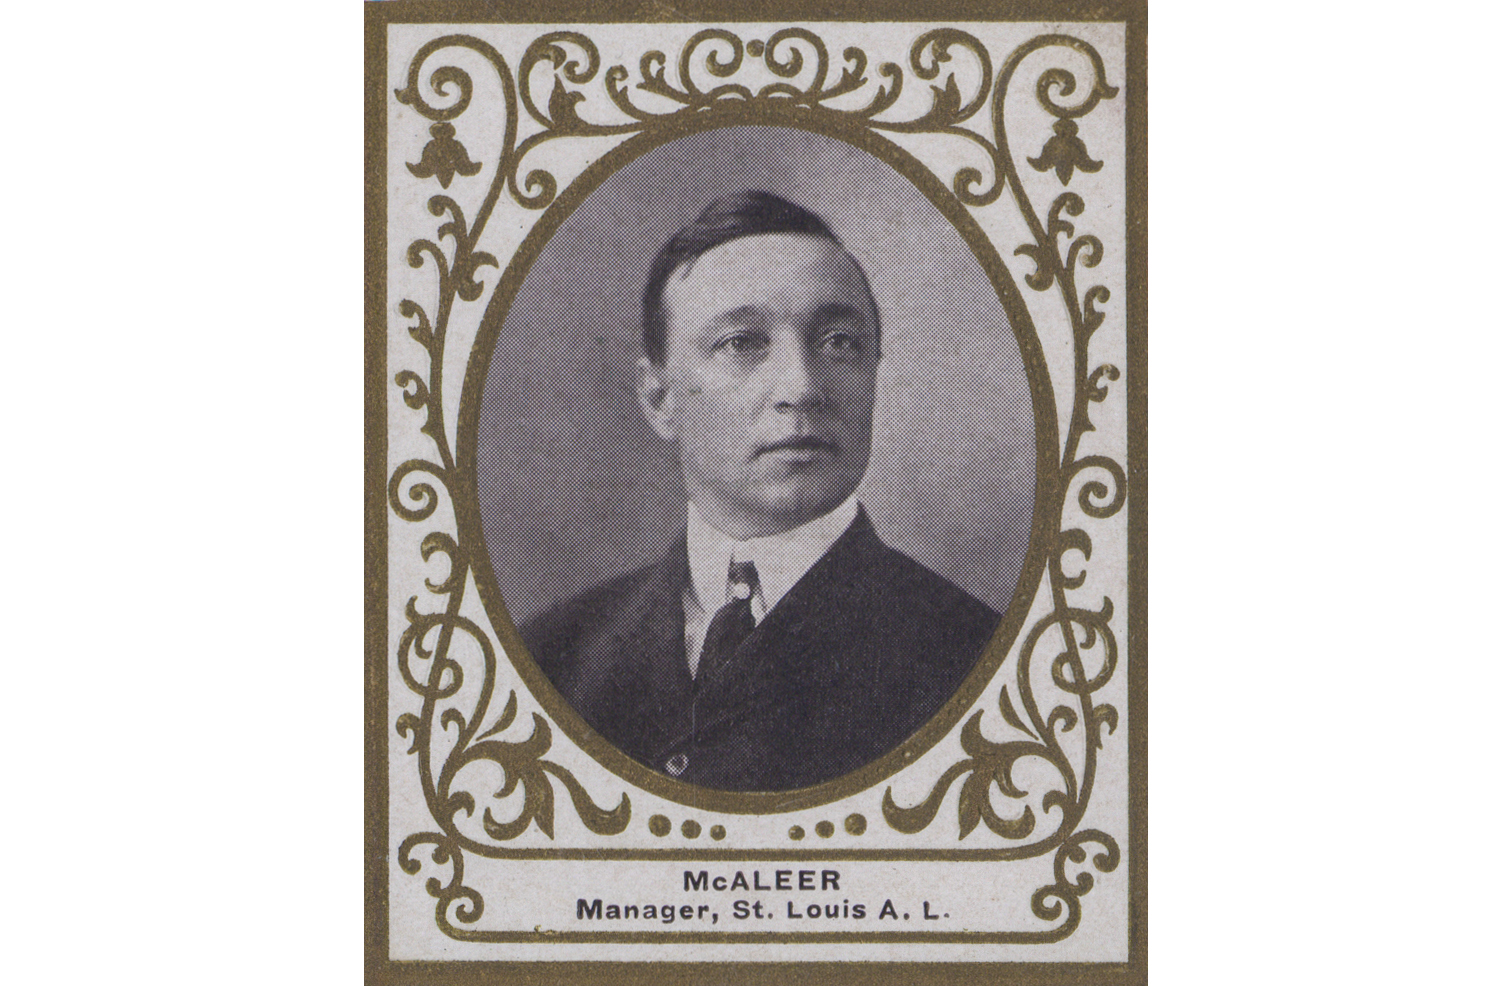 Jimmy McAleer, from a 1909 Ramly tobacco baseball card.